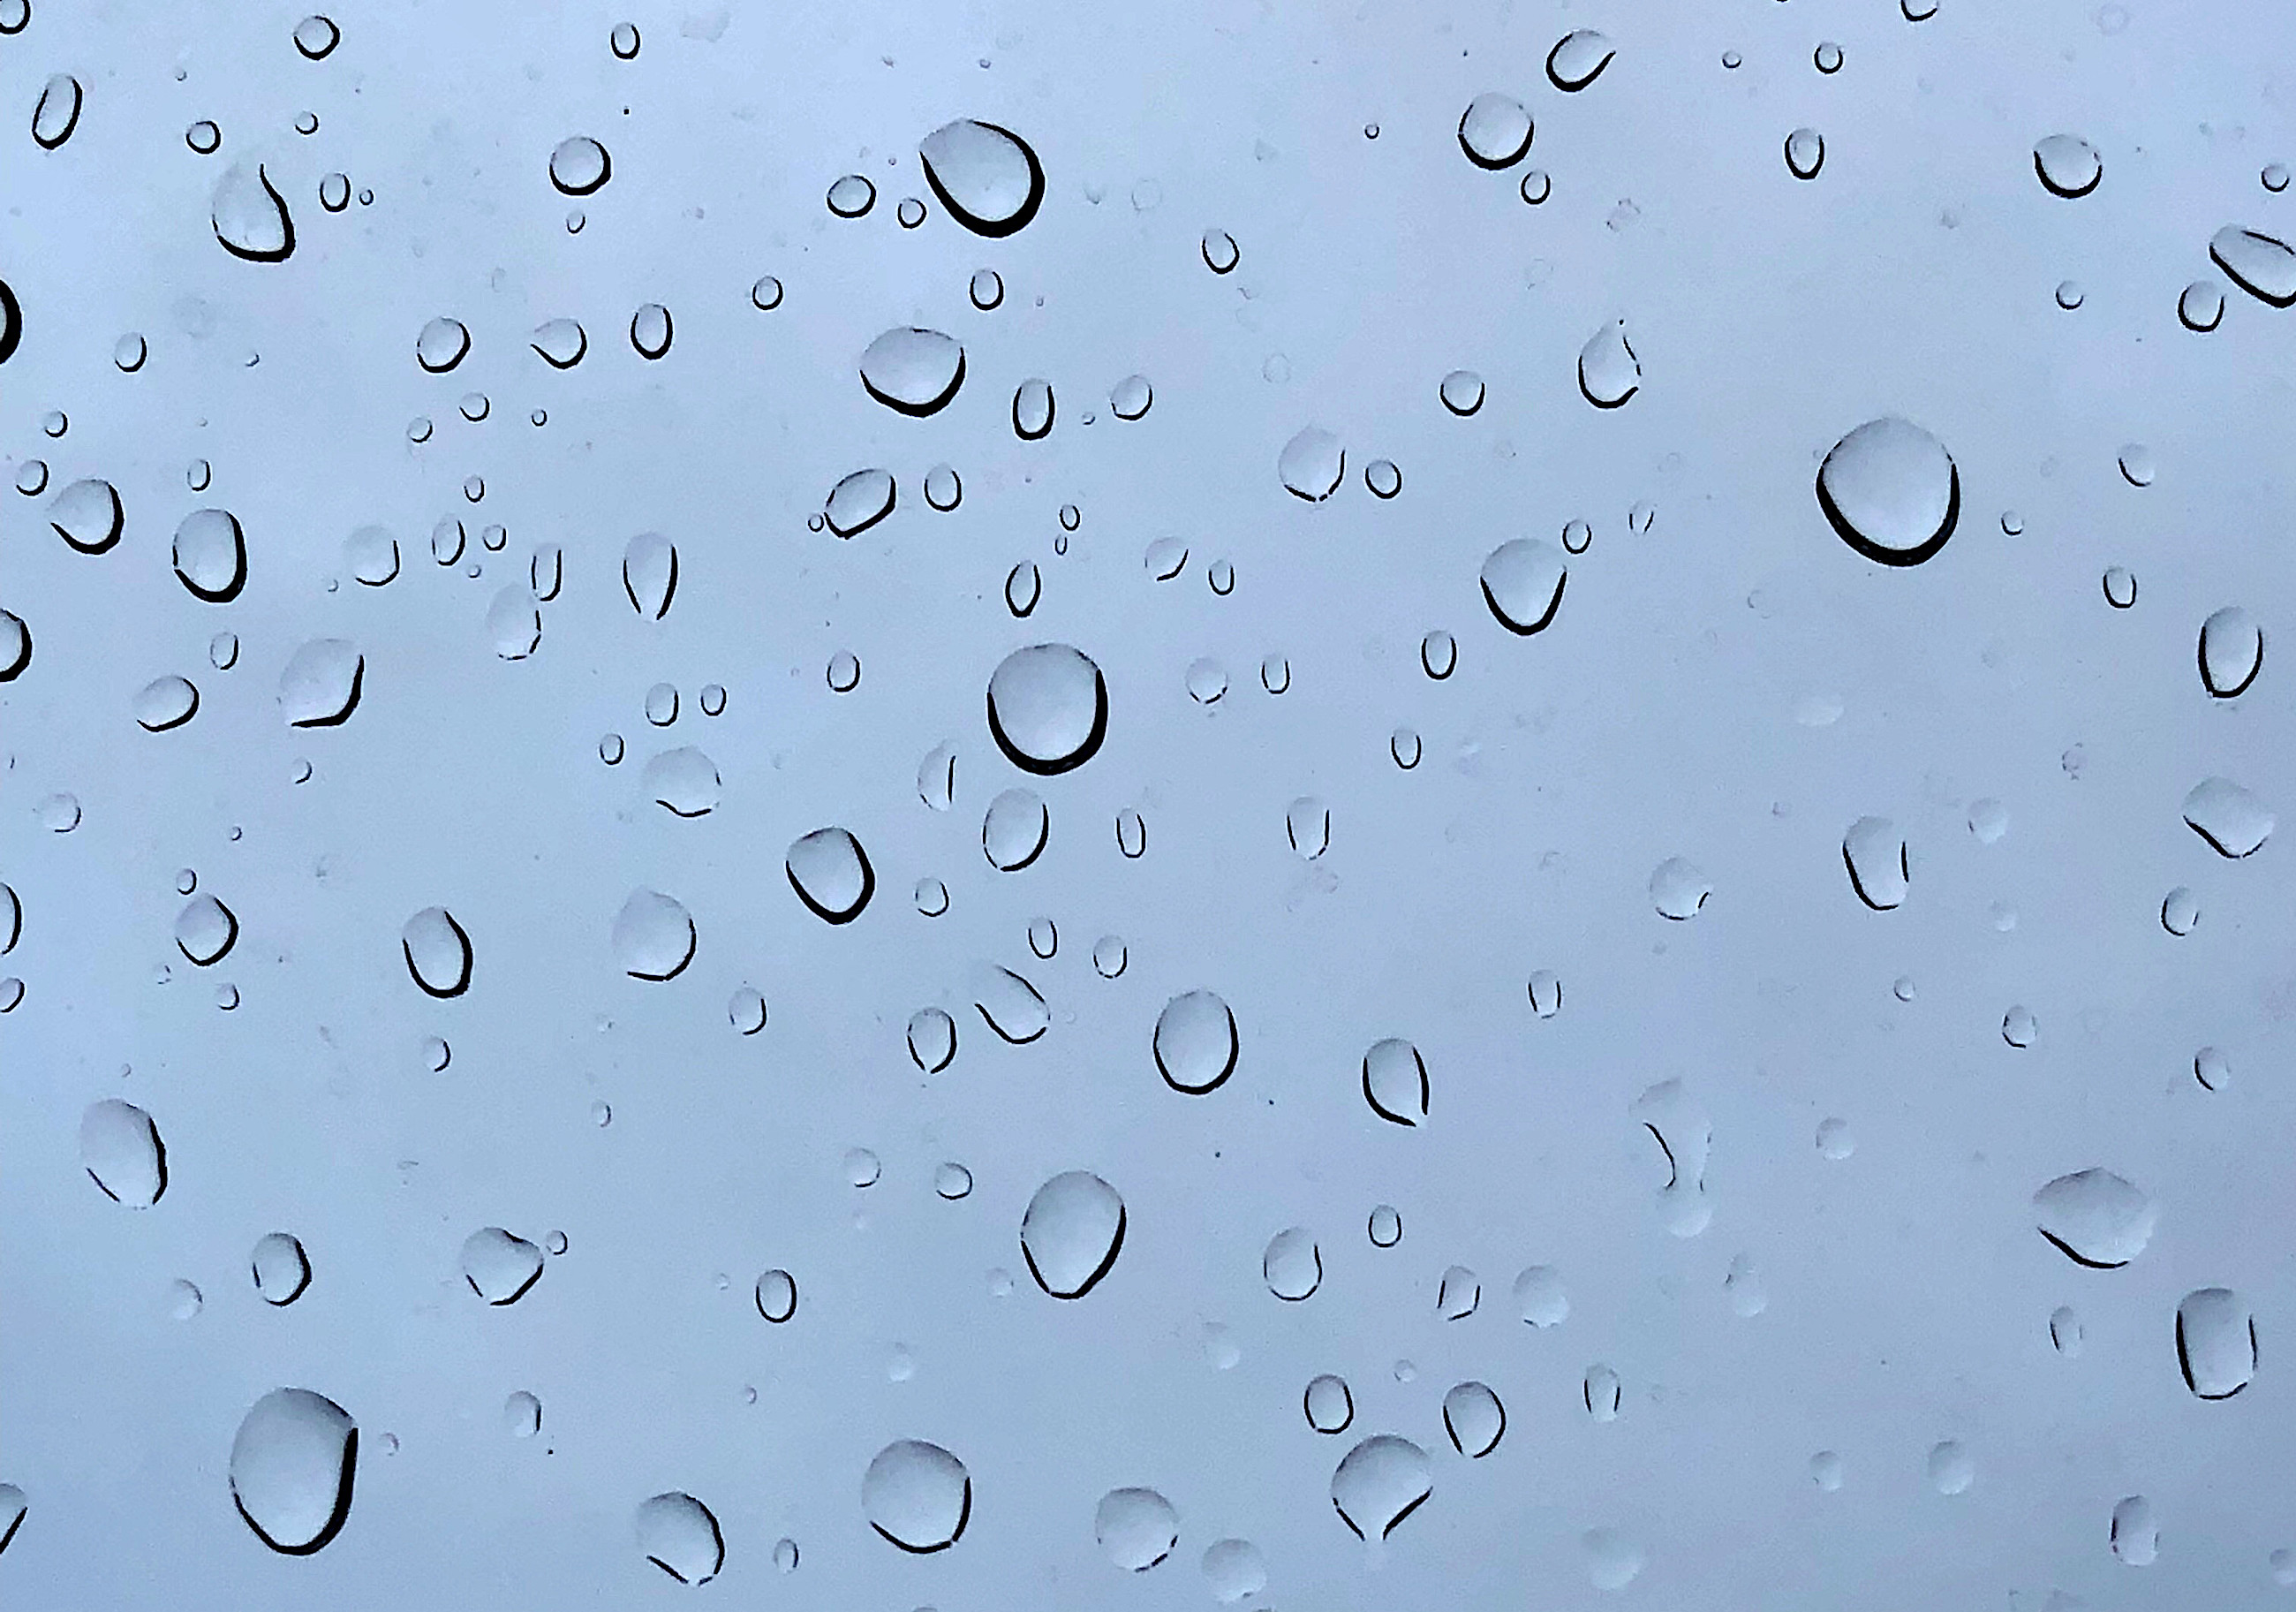 2600x1825 Water droplets image wallpaper horizontal